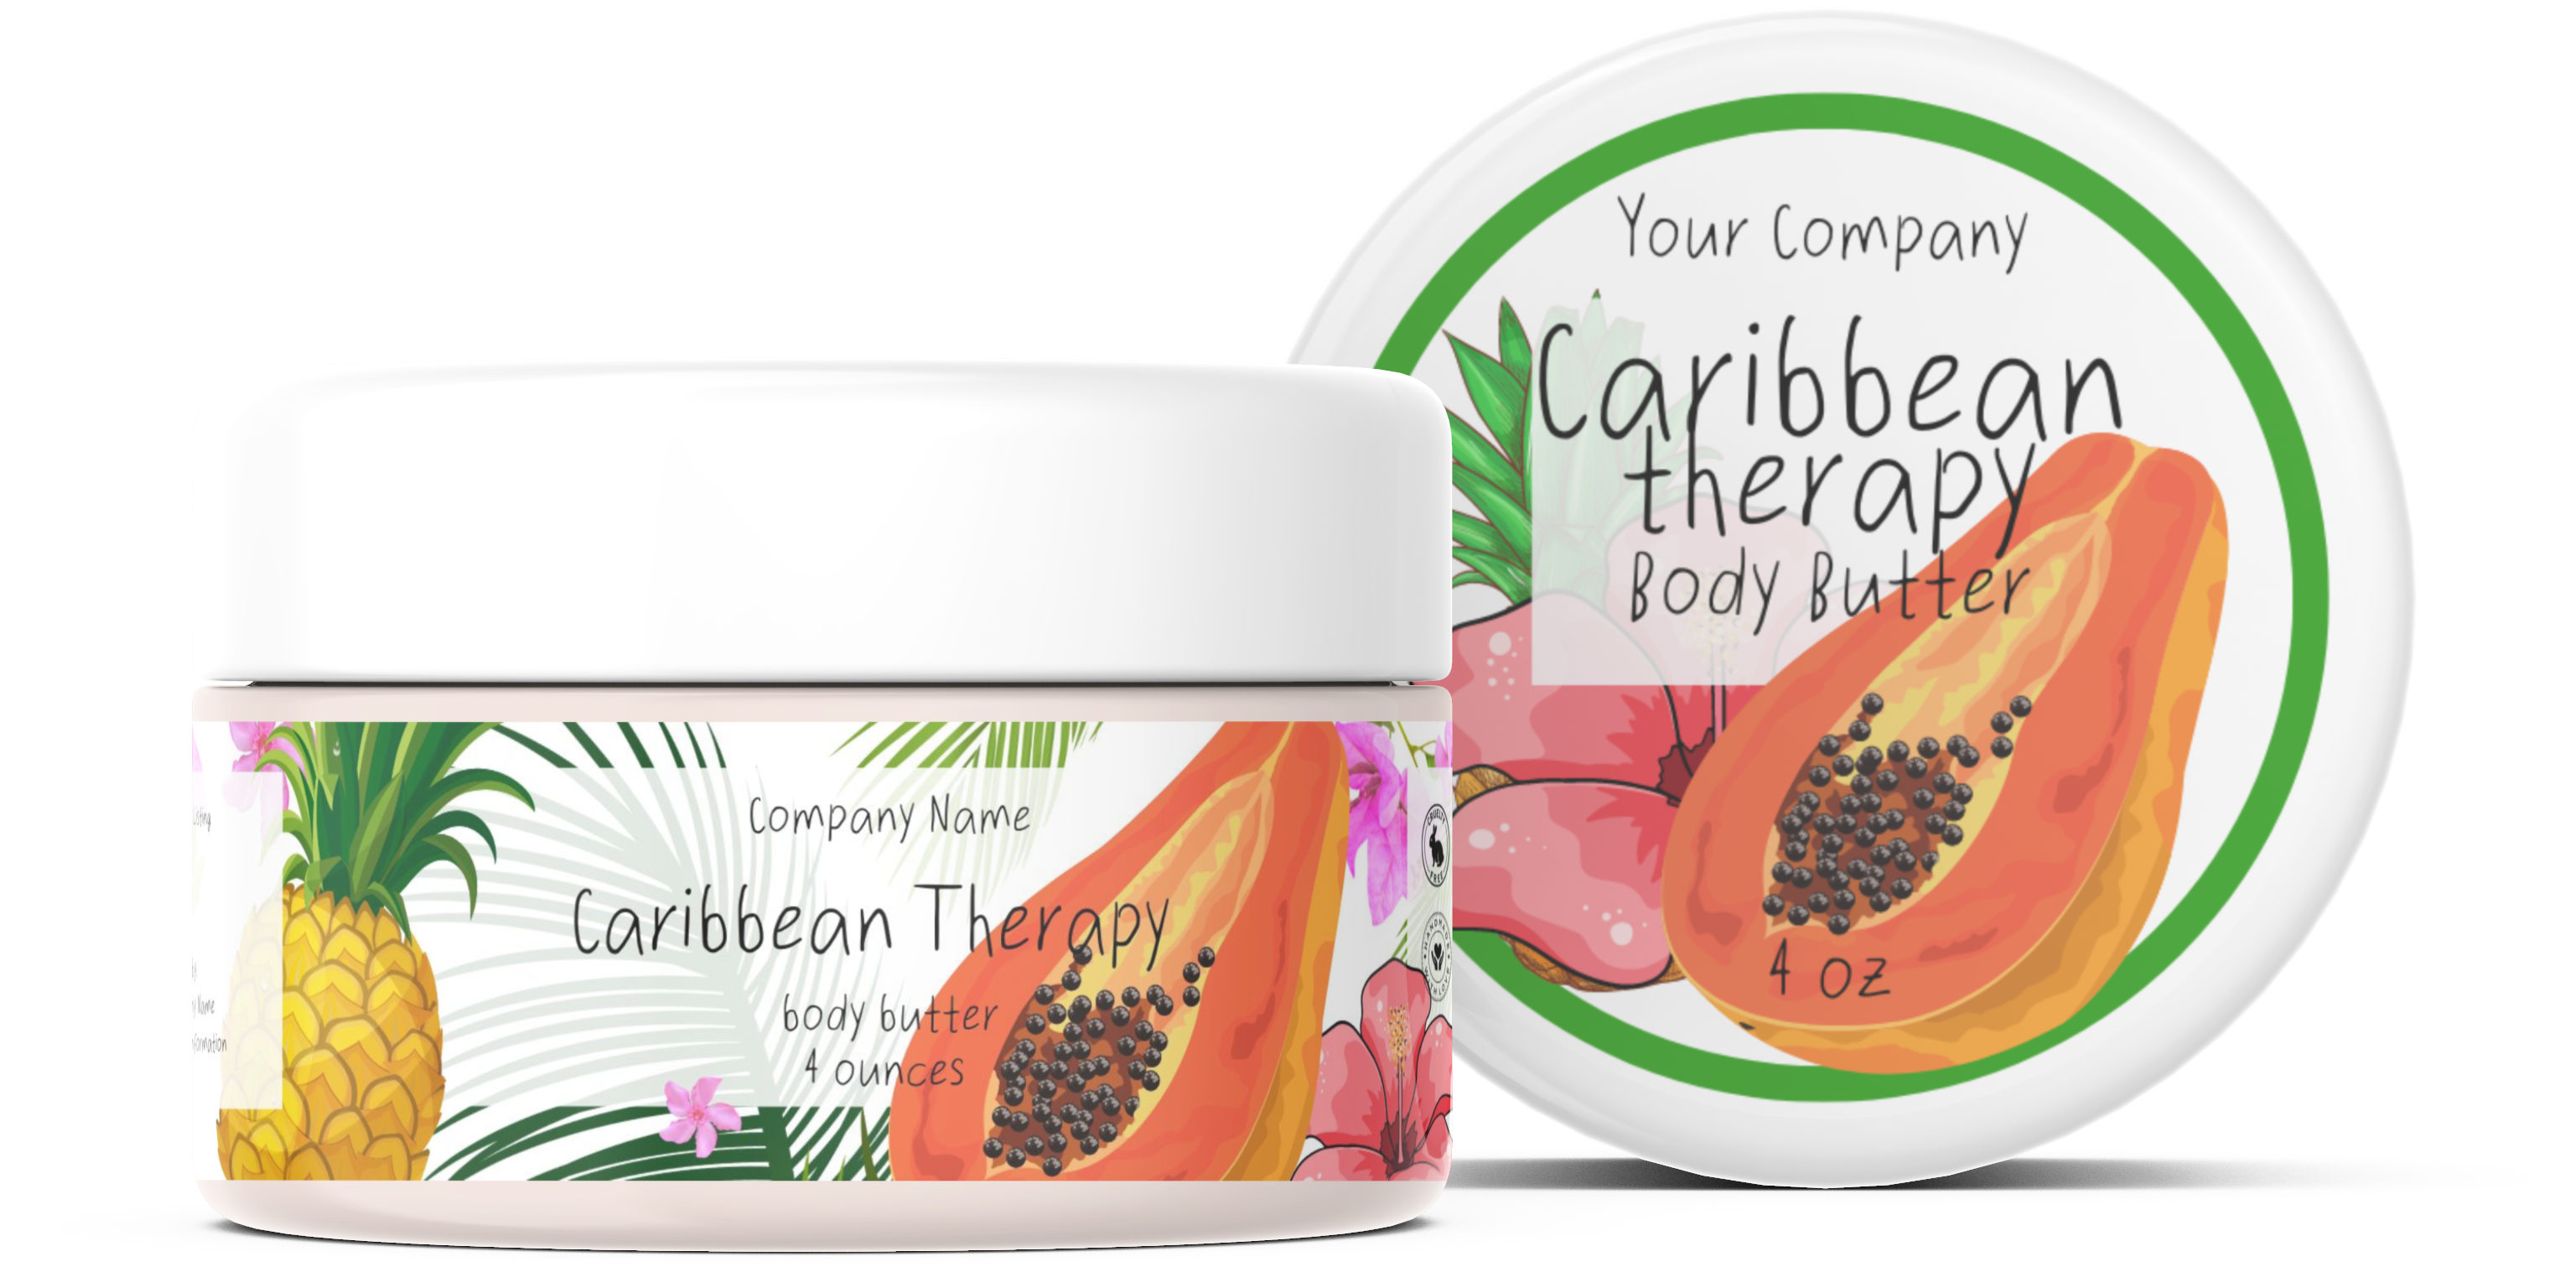 Caribbean themed Papaya Editable Label templates for Bath and Body